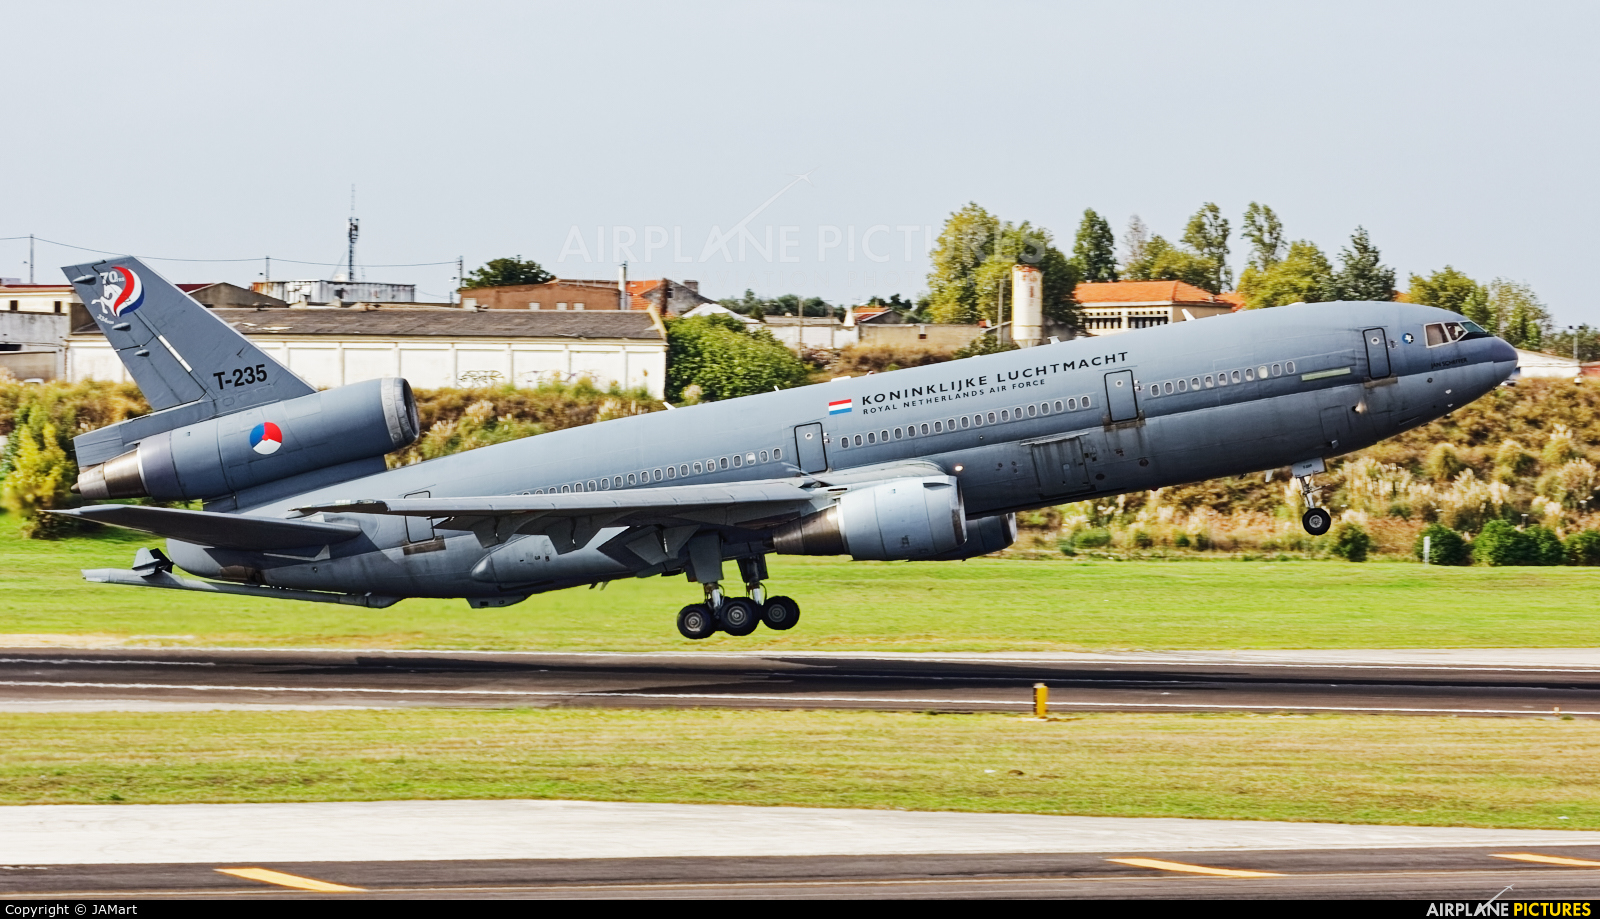 Netherlands - Air Force T-235 aircraft at Lisbon